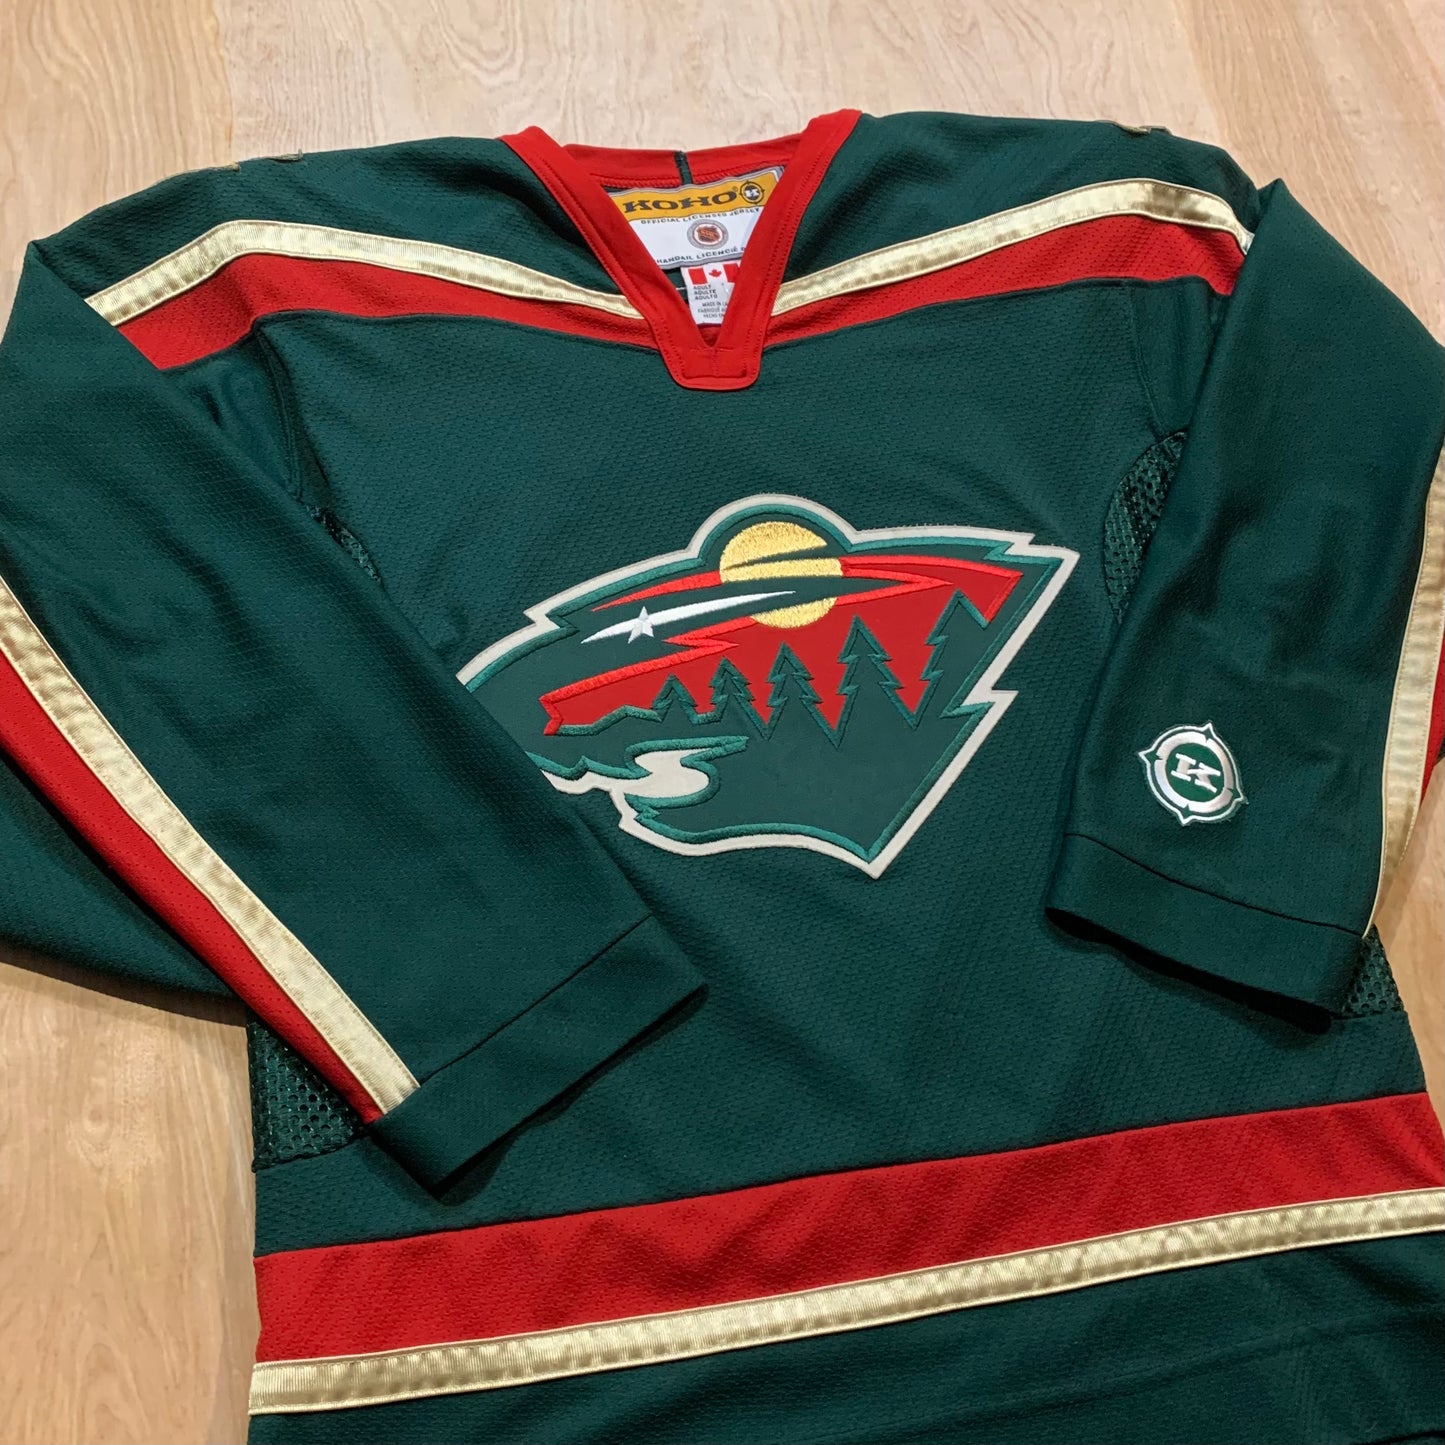 Authentic Stitched Minnesota Wild Jersey